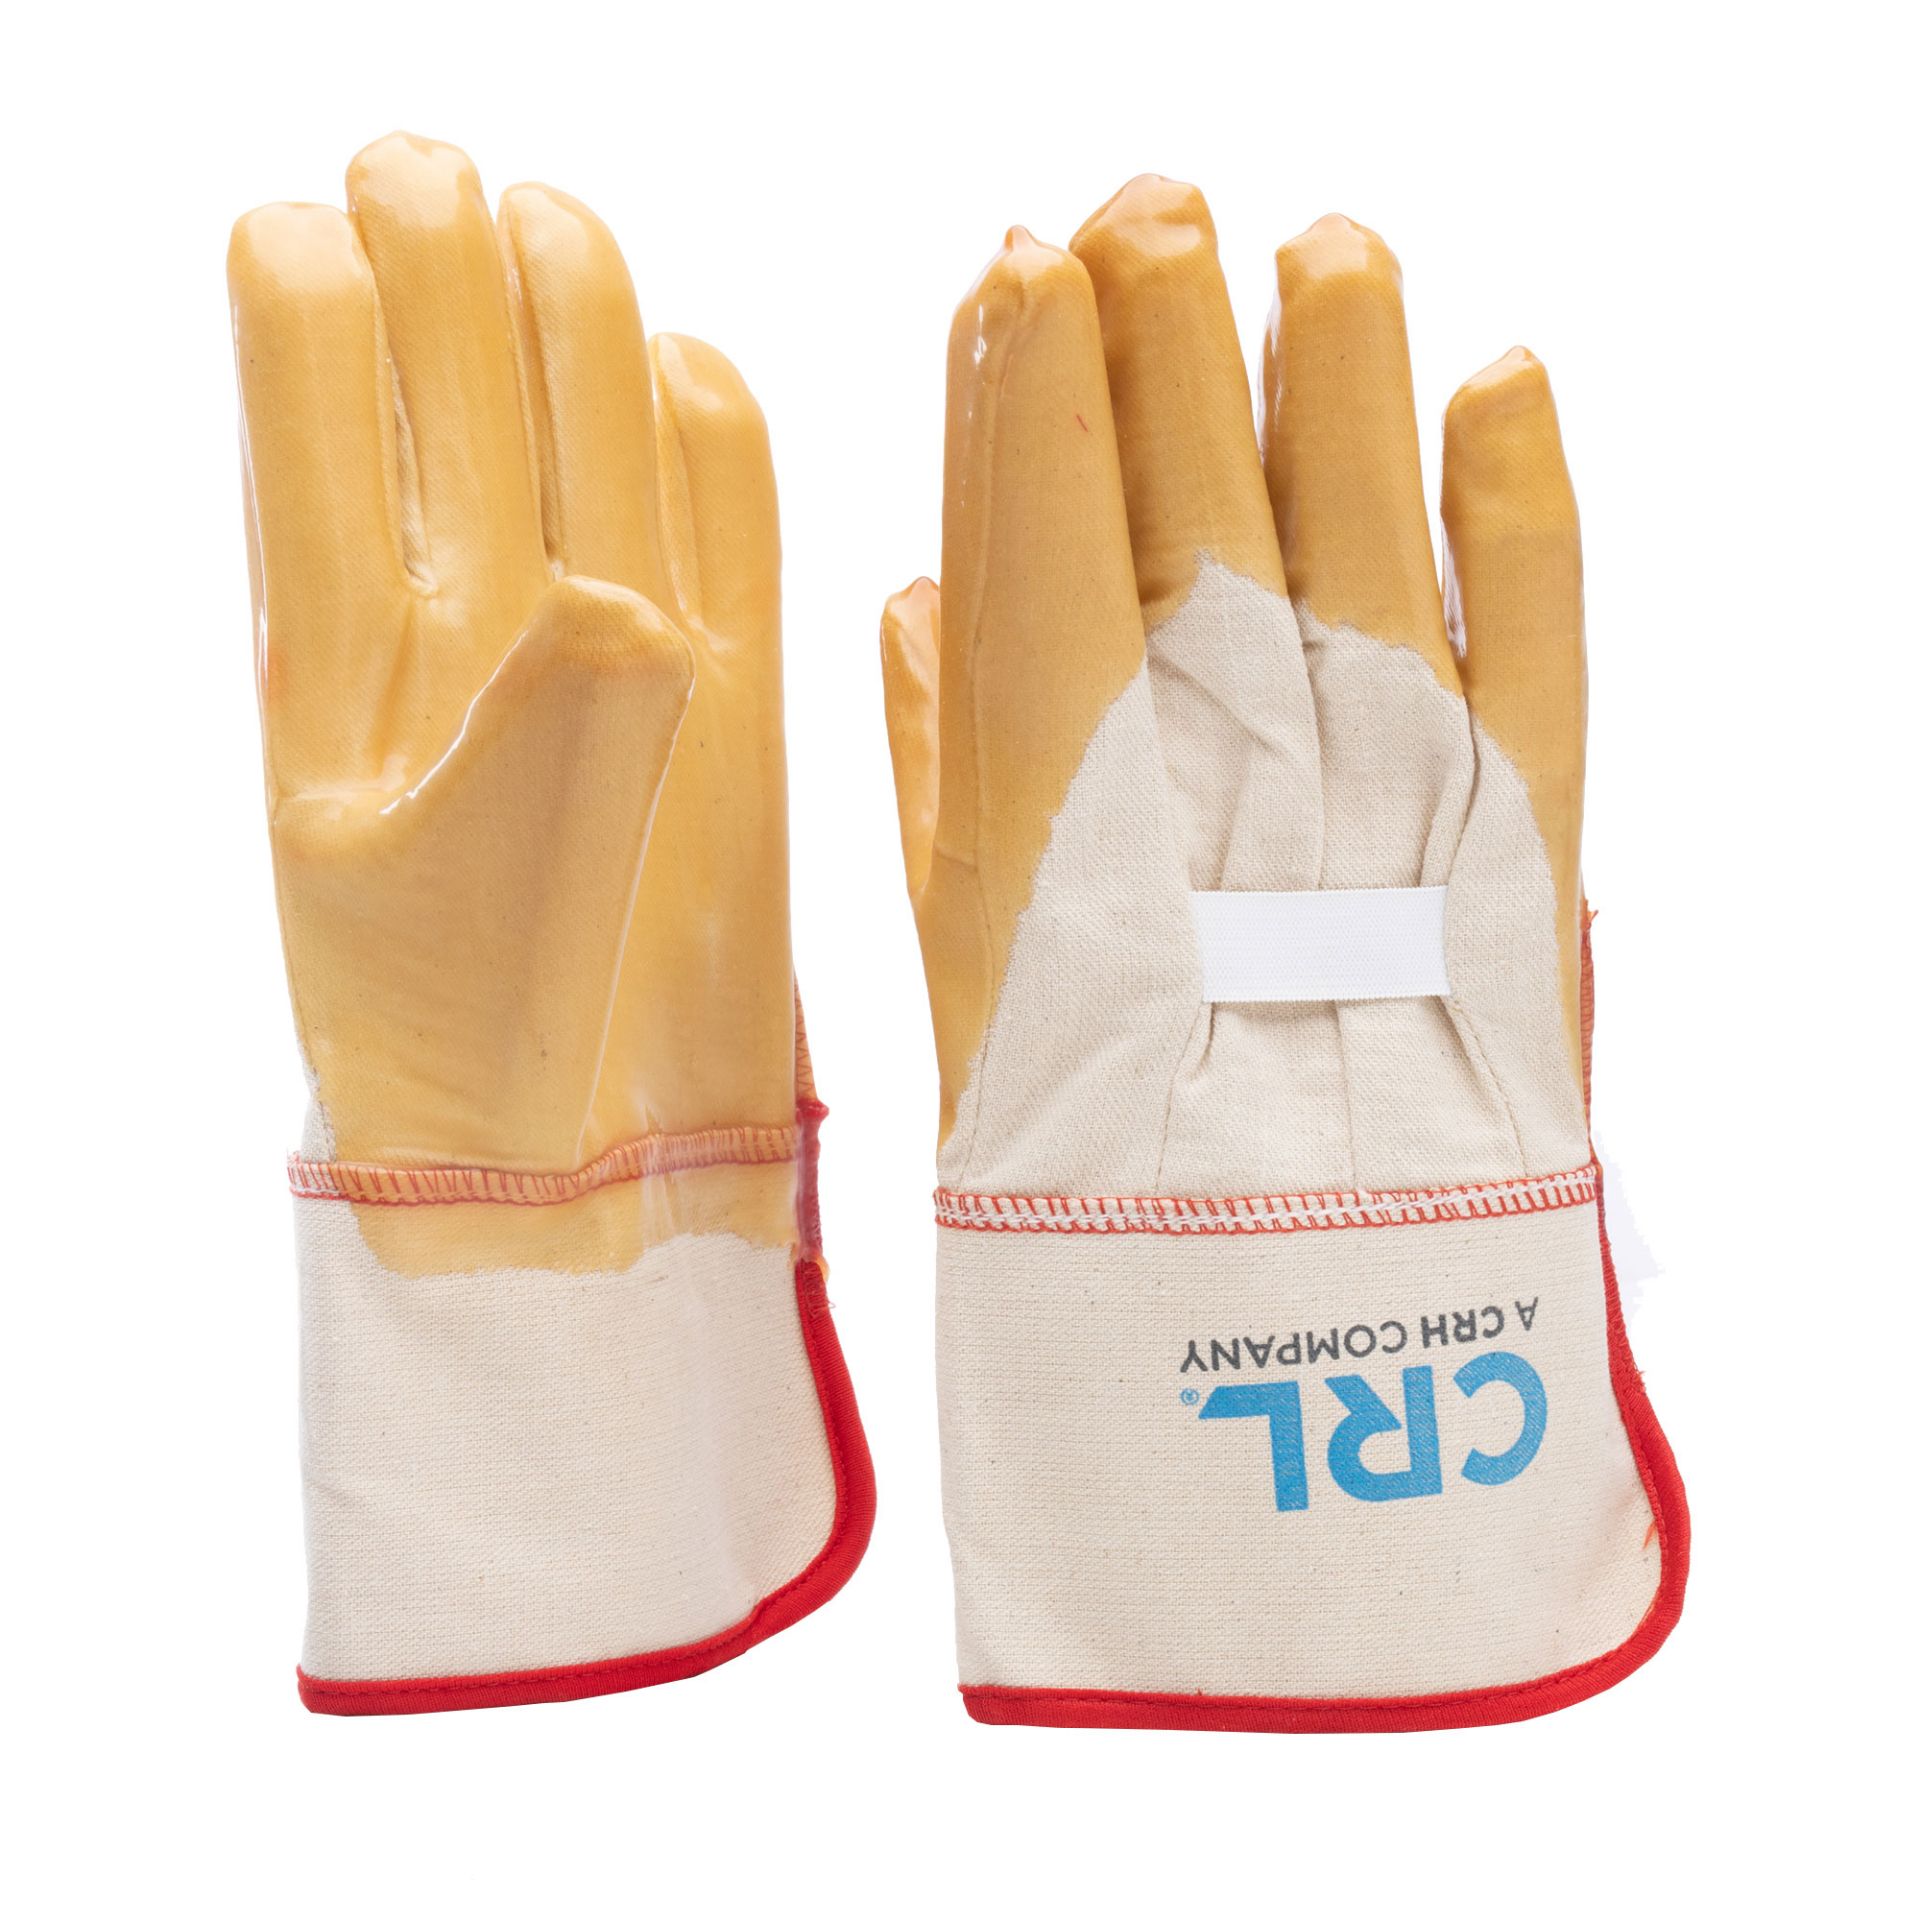 Interglass| Gauntlet Cuff Rubber Palm Gloves (Pair)